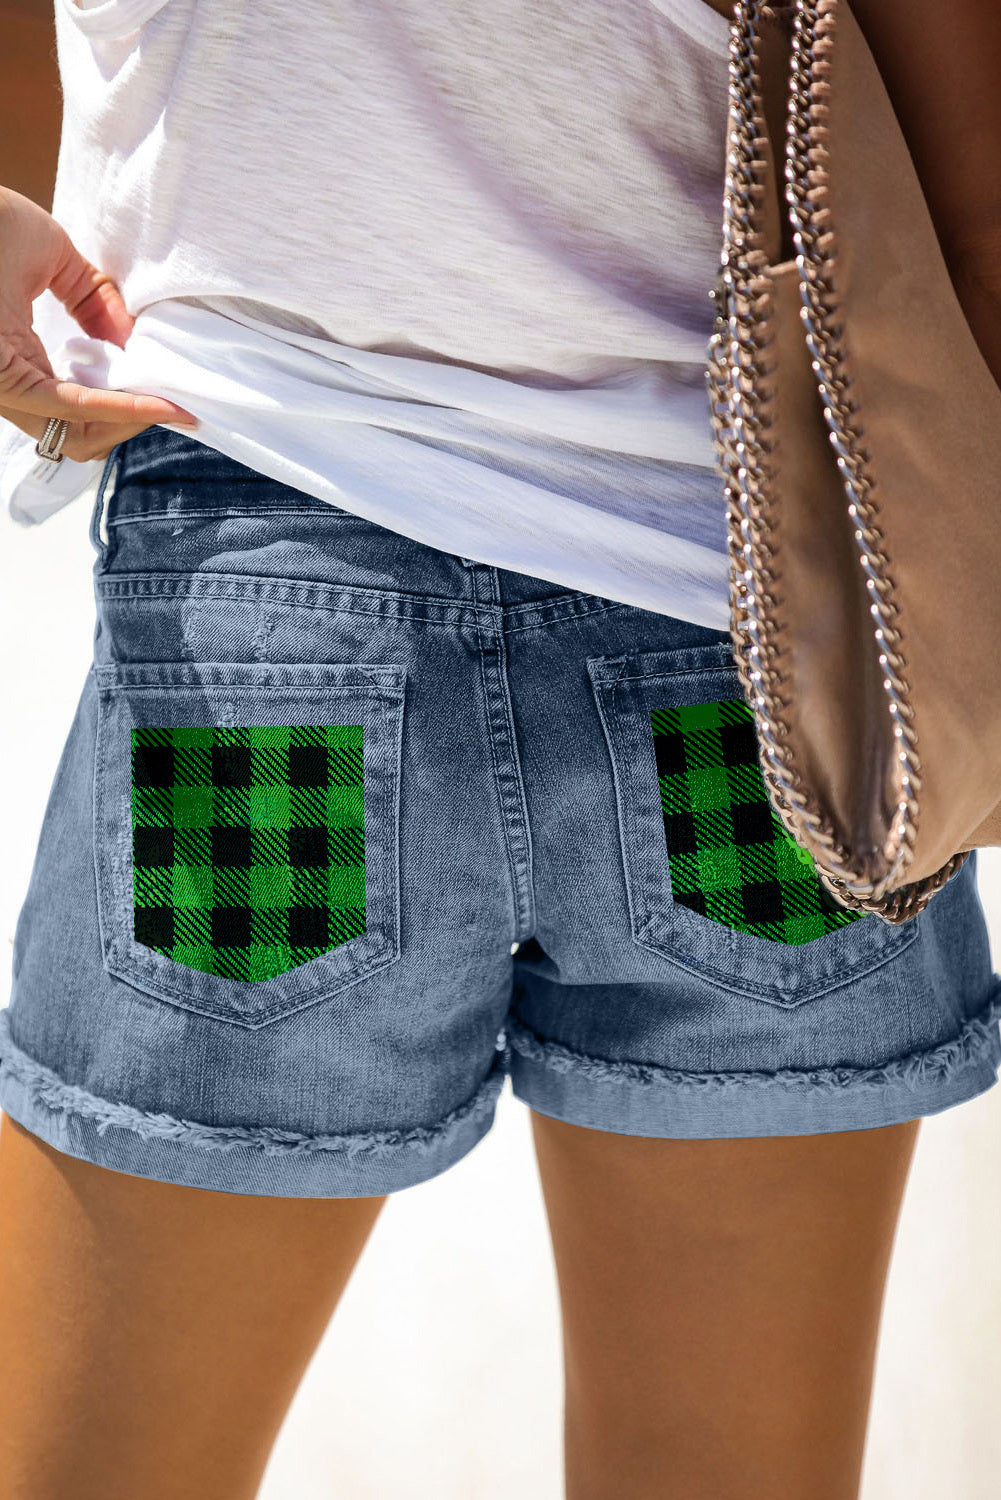 Green Plaid Denim Shorts Mid Rise Distressed Cuffed Jeans Shorts LC7831008-9